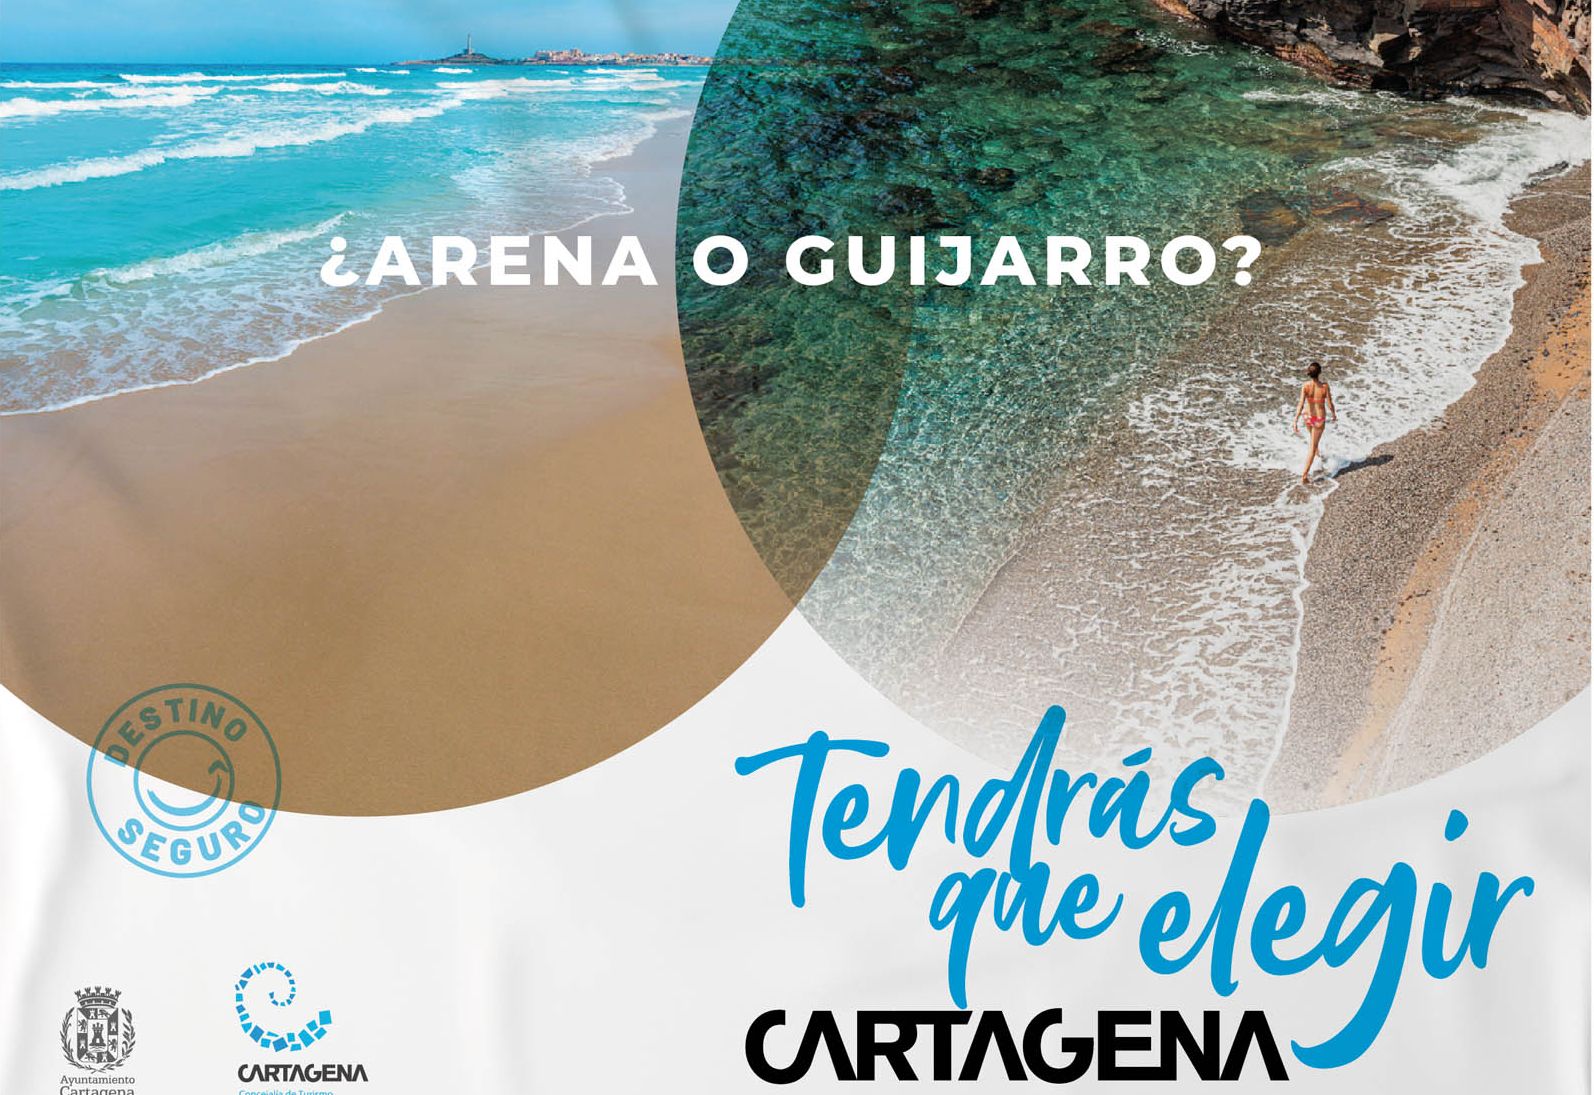 Imagen de la campaa 'Cartagena: tendrs que elegir'